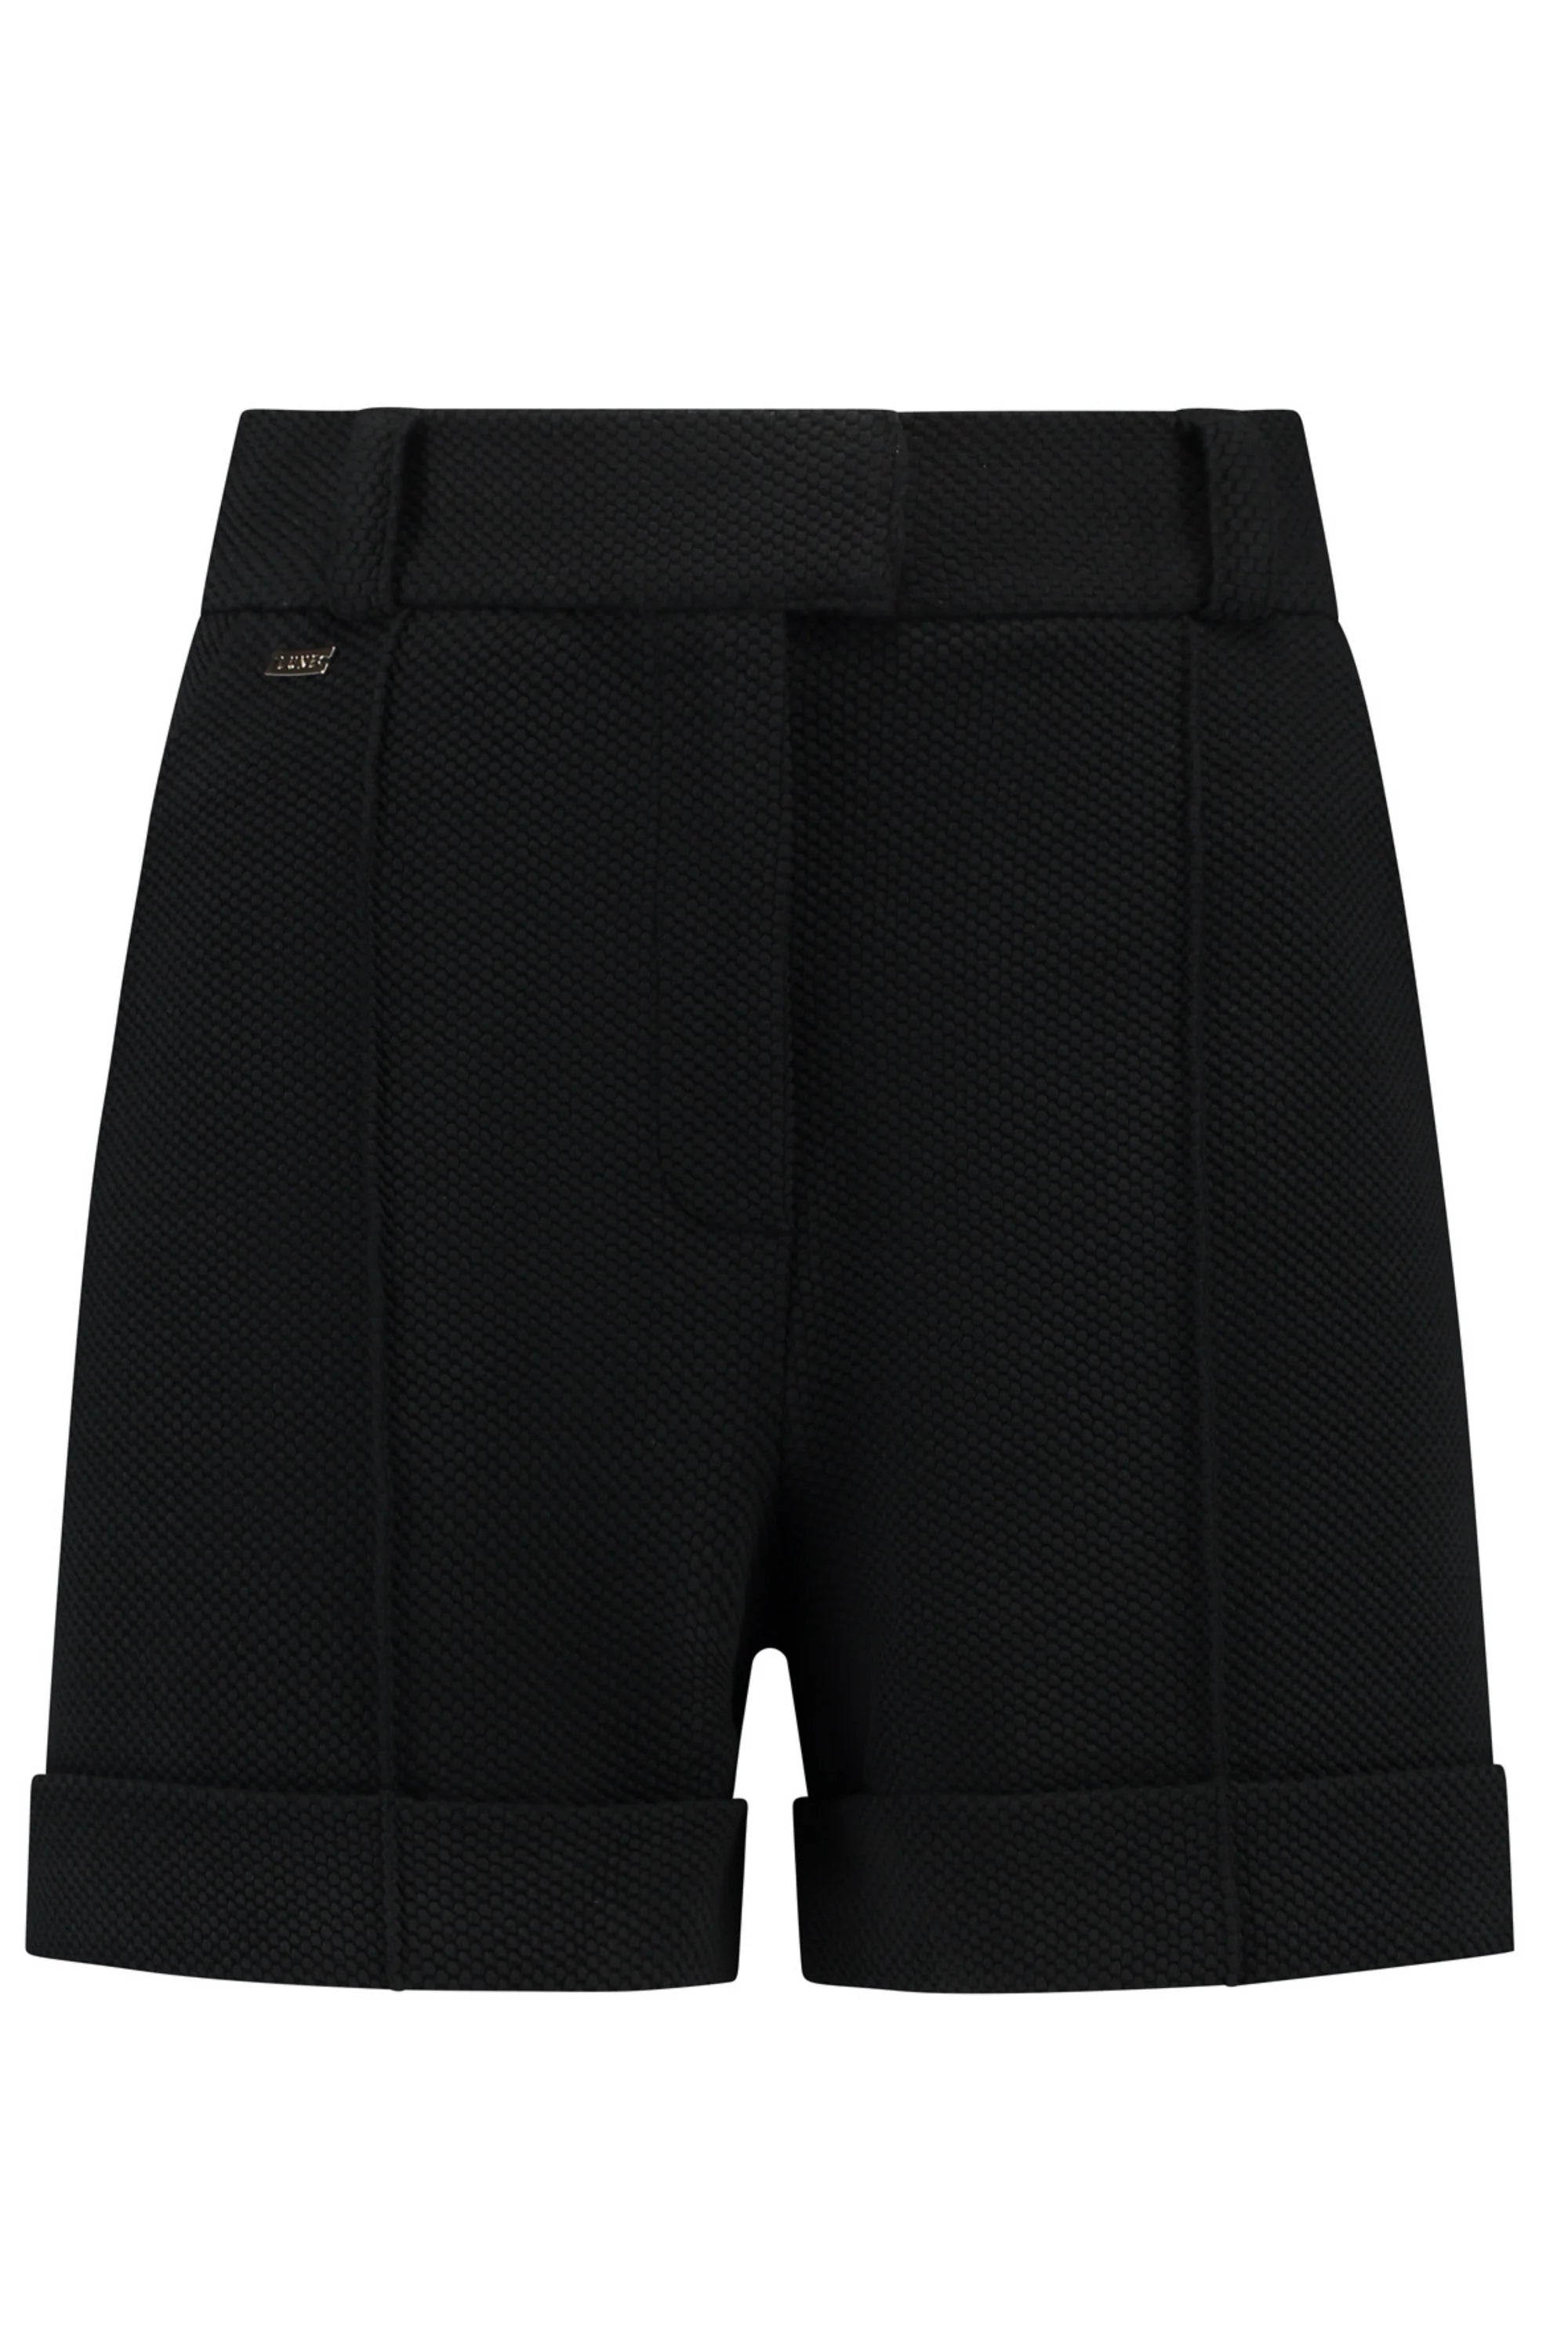 MOON CLASSIC wide leg shorts - Black